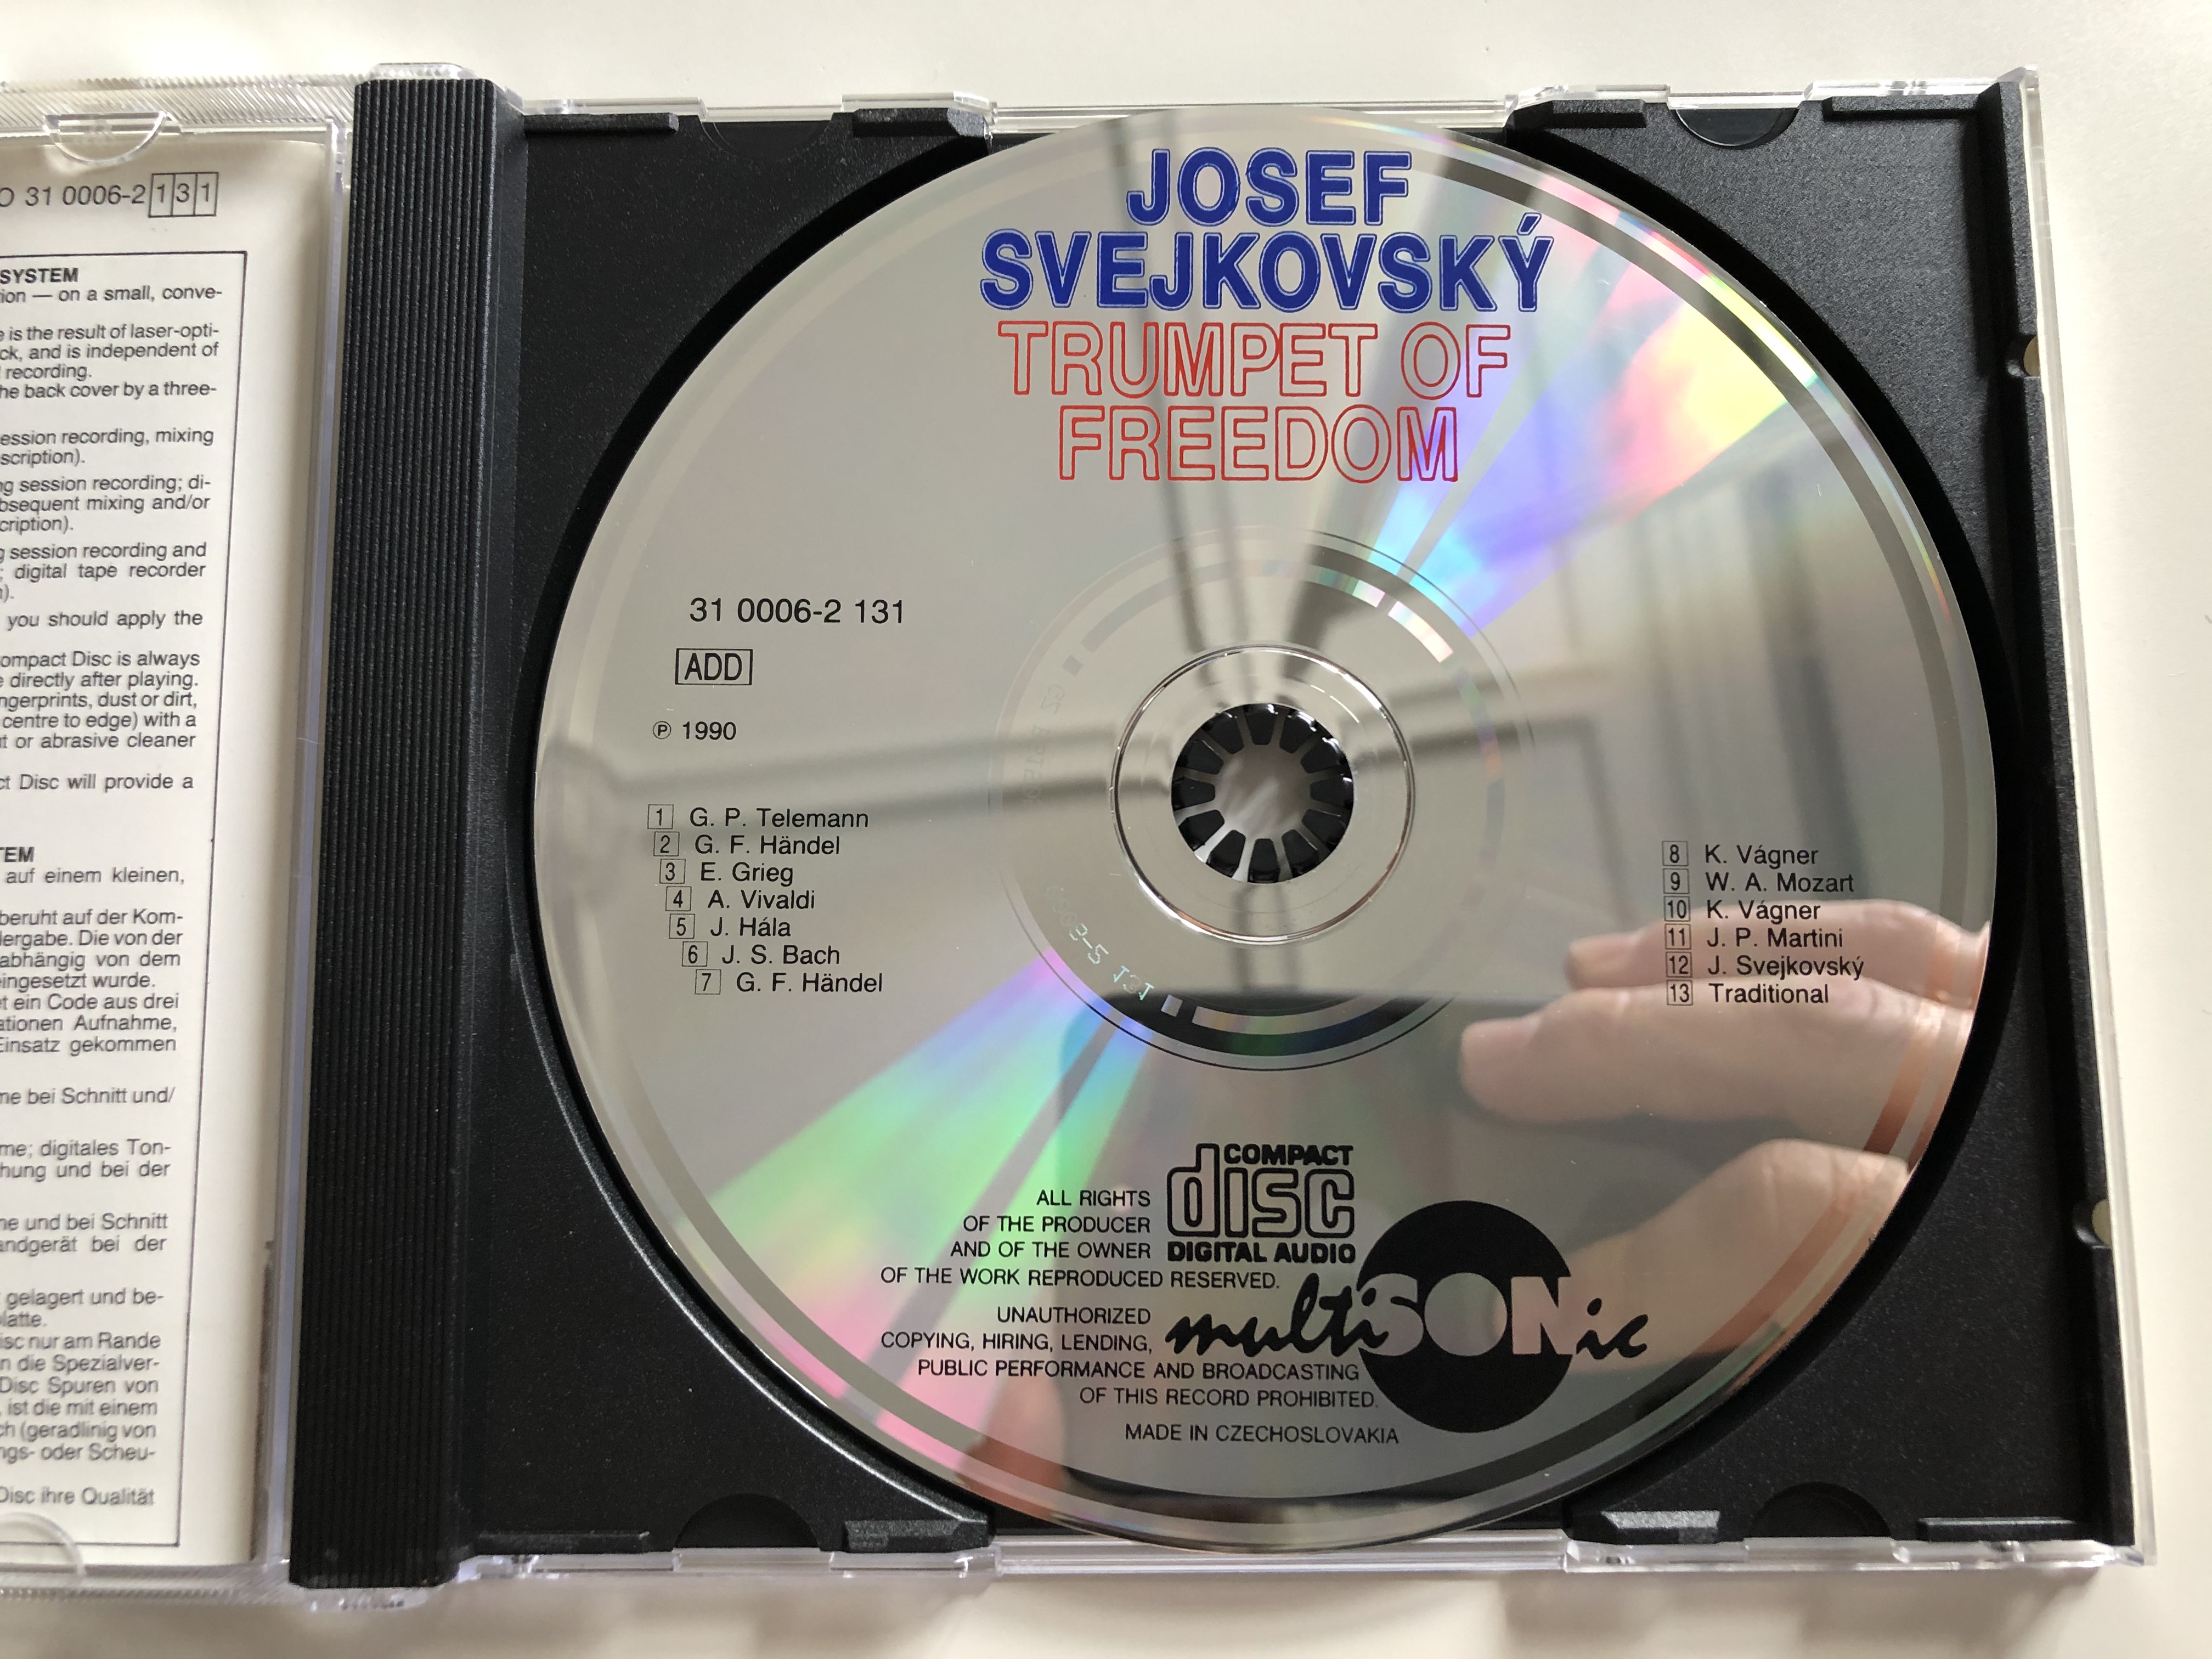 trumpet-of-freedom-josef-svejkovsk-sonic-orchestra-bach-telemann-handel-vivaldi-mozart-grieg-martini-hala-vagner-svejkovsky-multisonic-audio-cd-1990-stereo-31-0006-2-131-4-.jpg